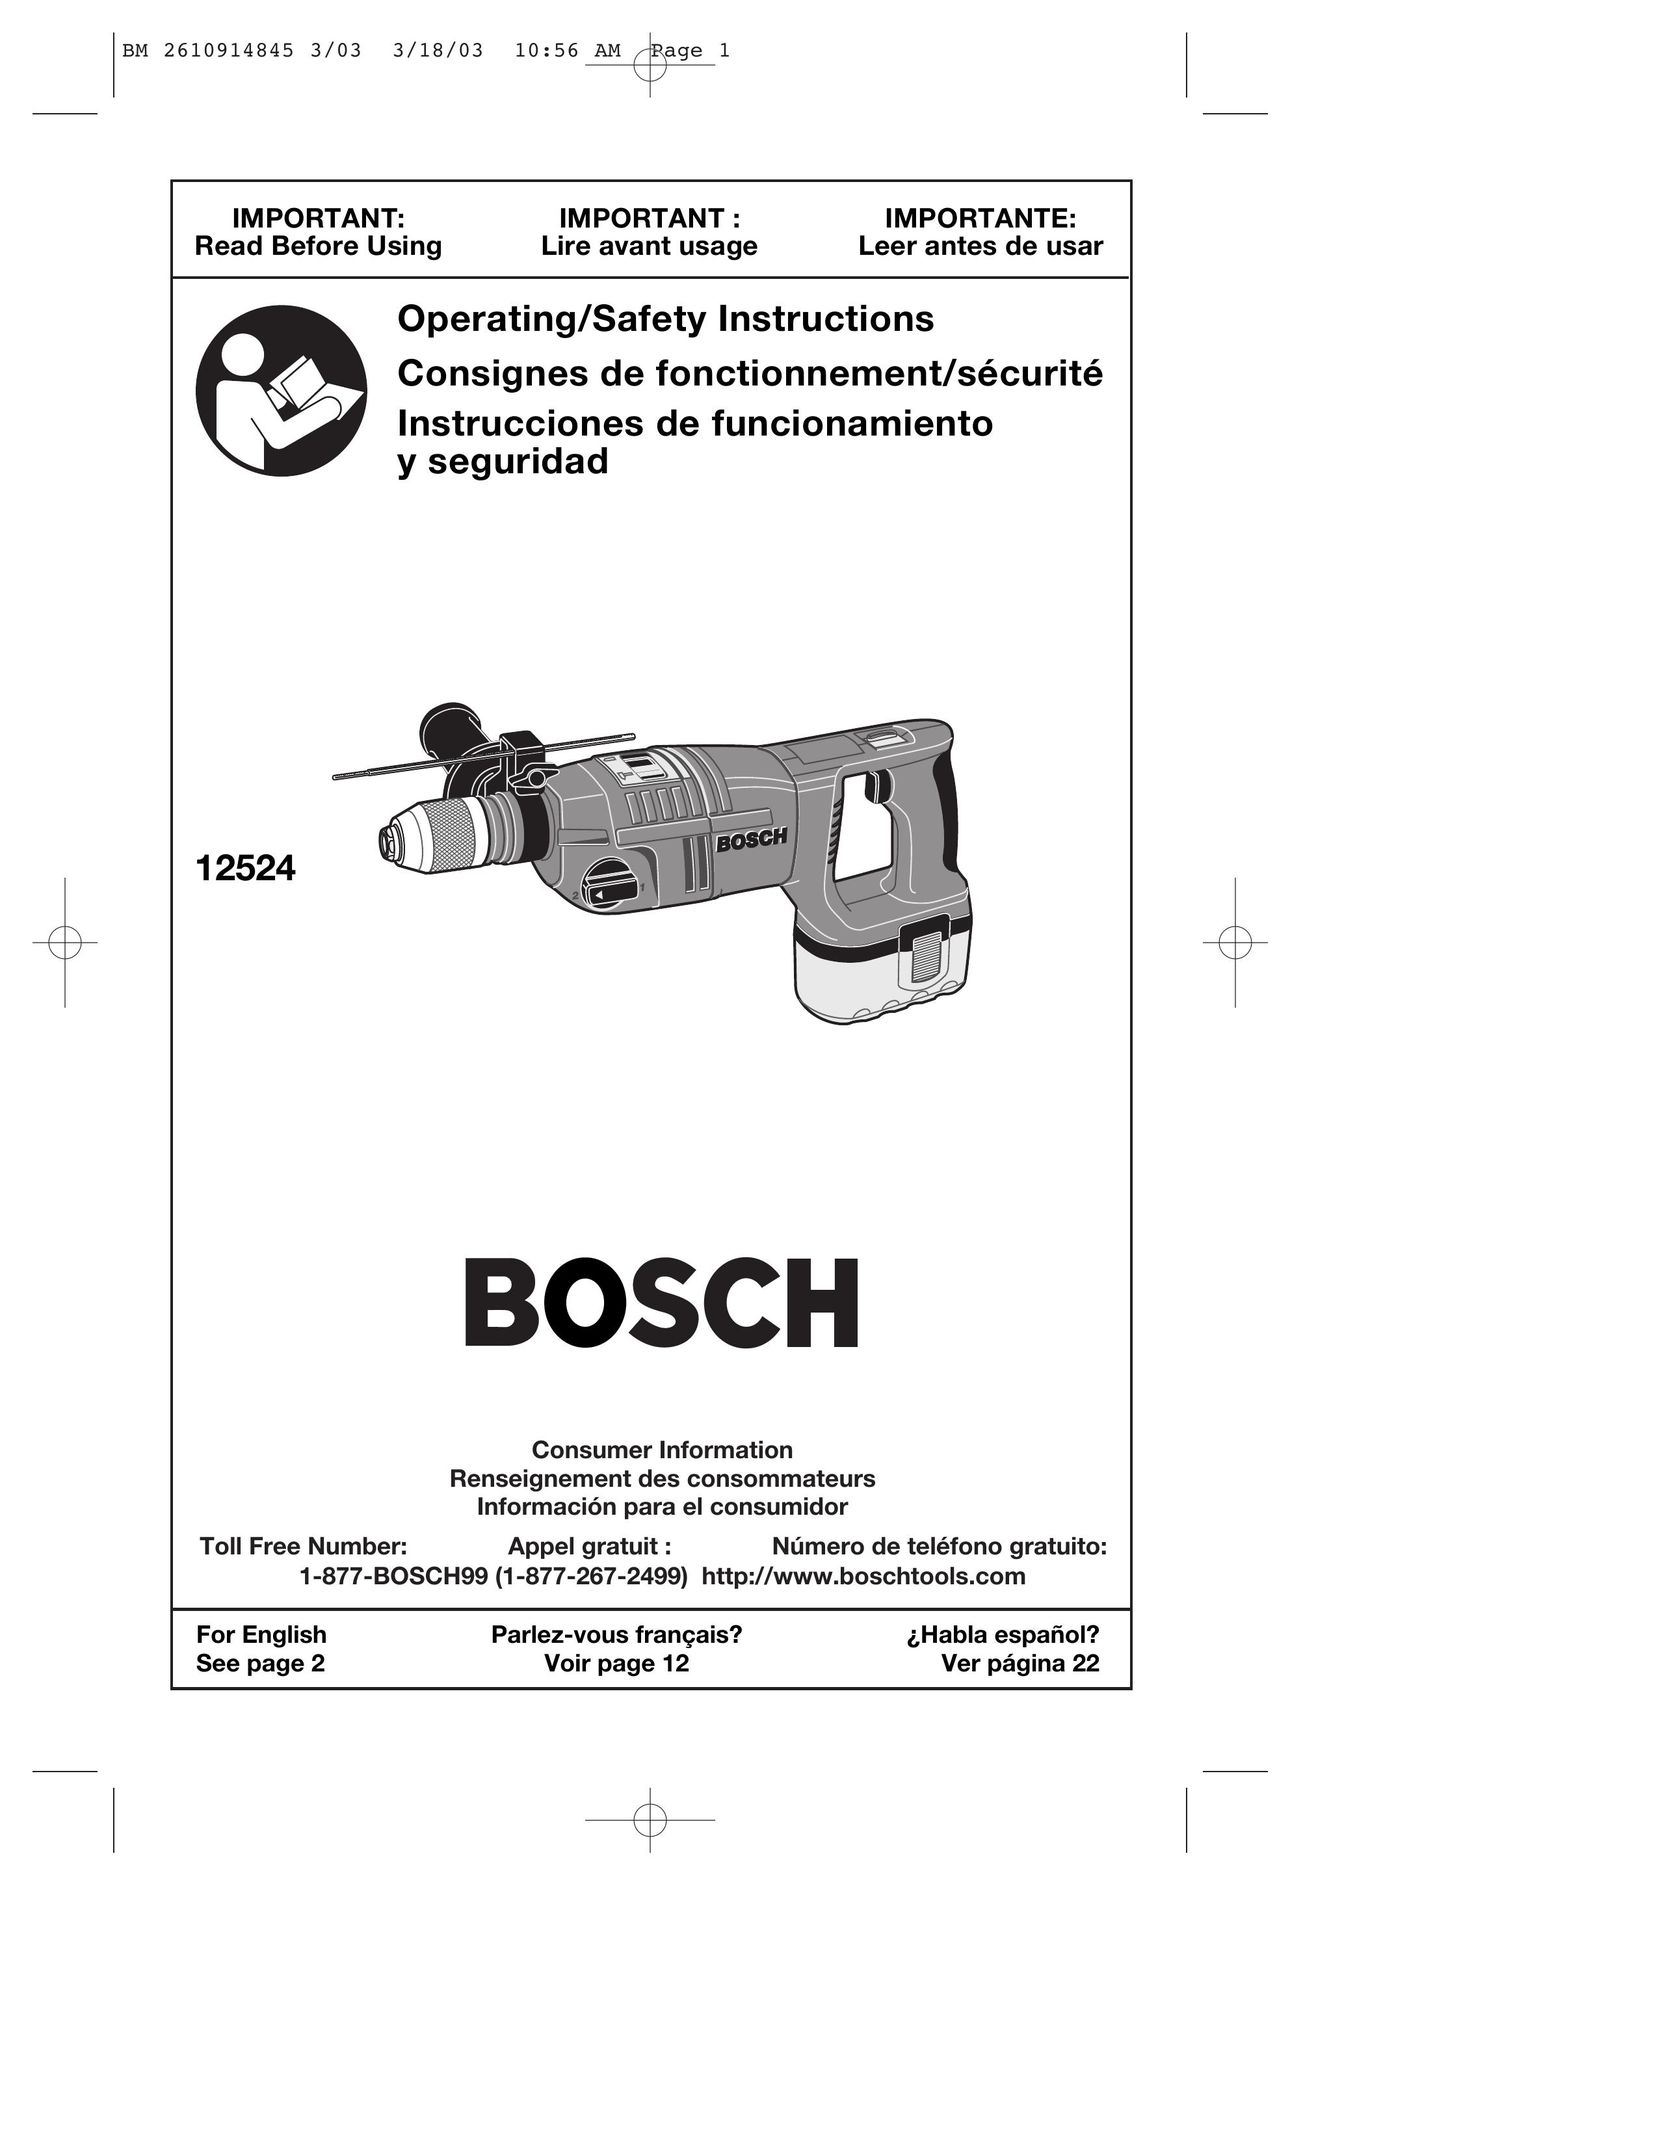 Bosch Power Tools 12524 Cordless Drill User Manual